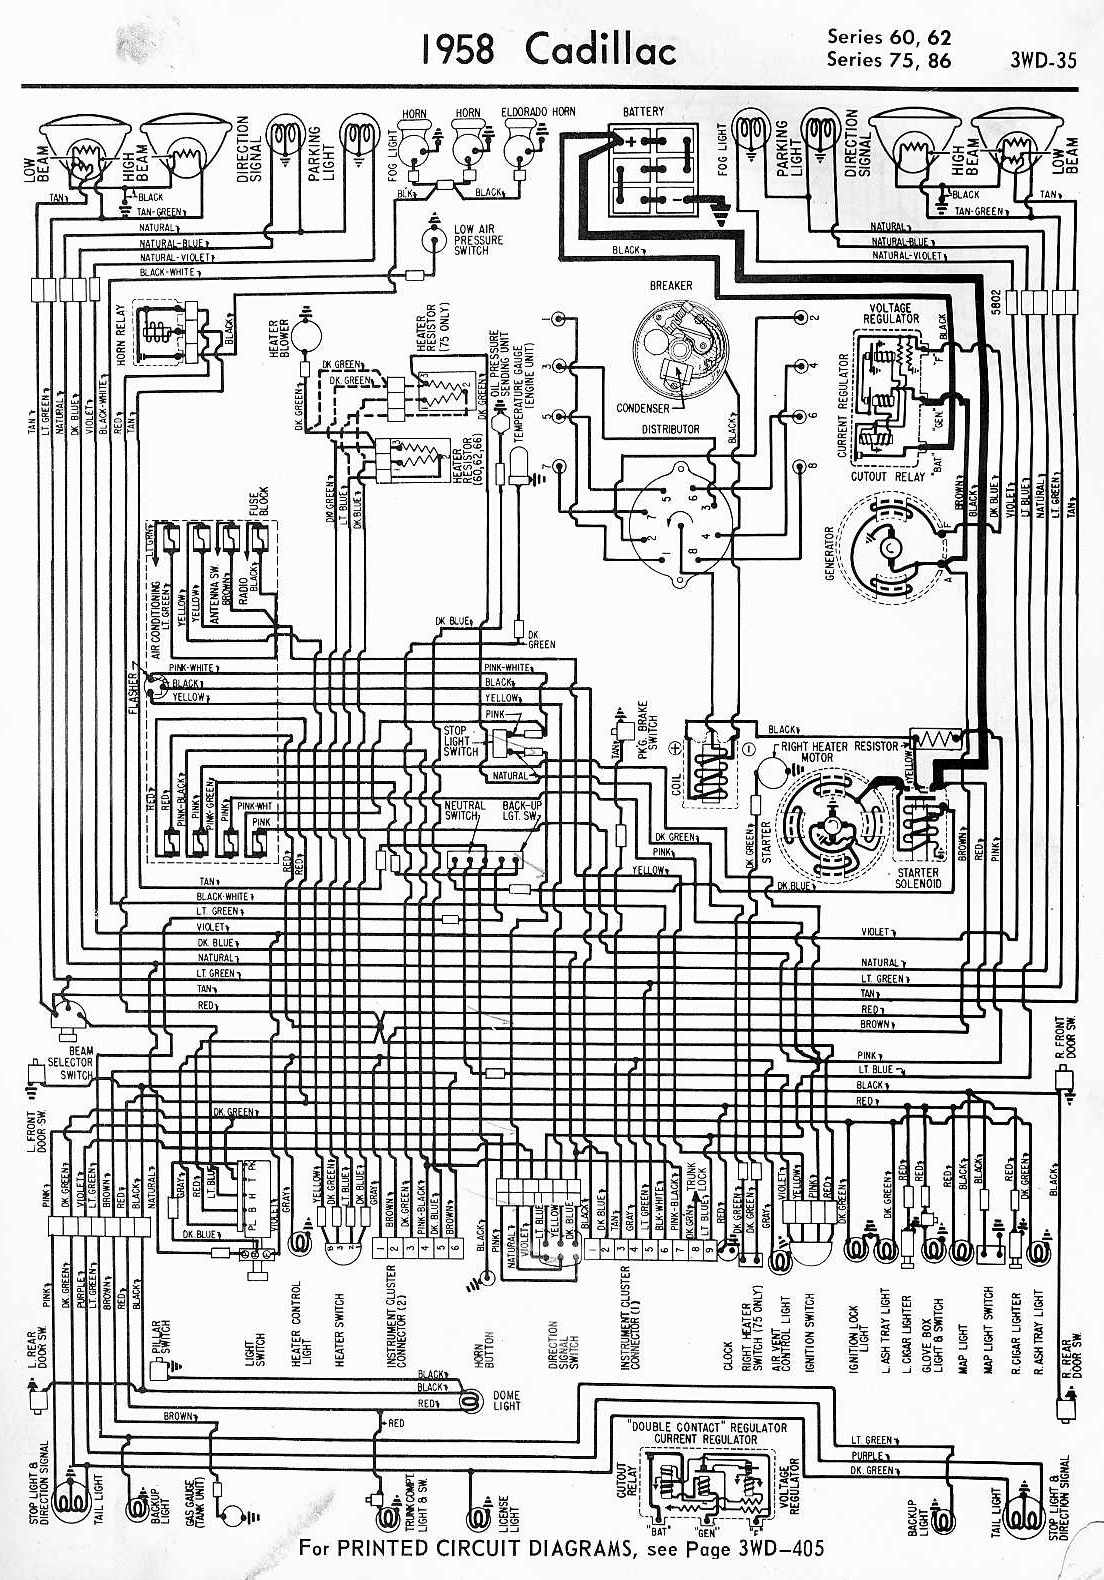 Cadillac - car manuals, wiring diagrams PDF & fault codes